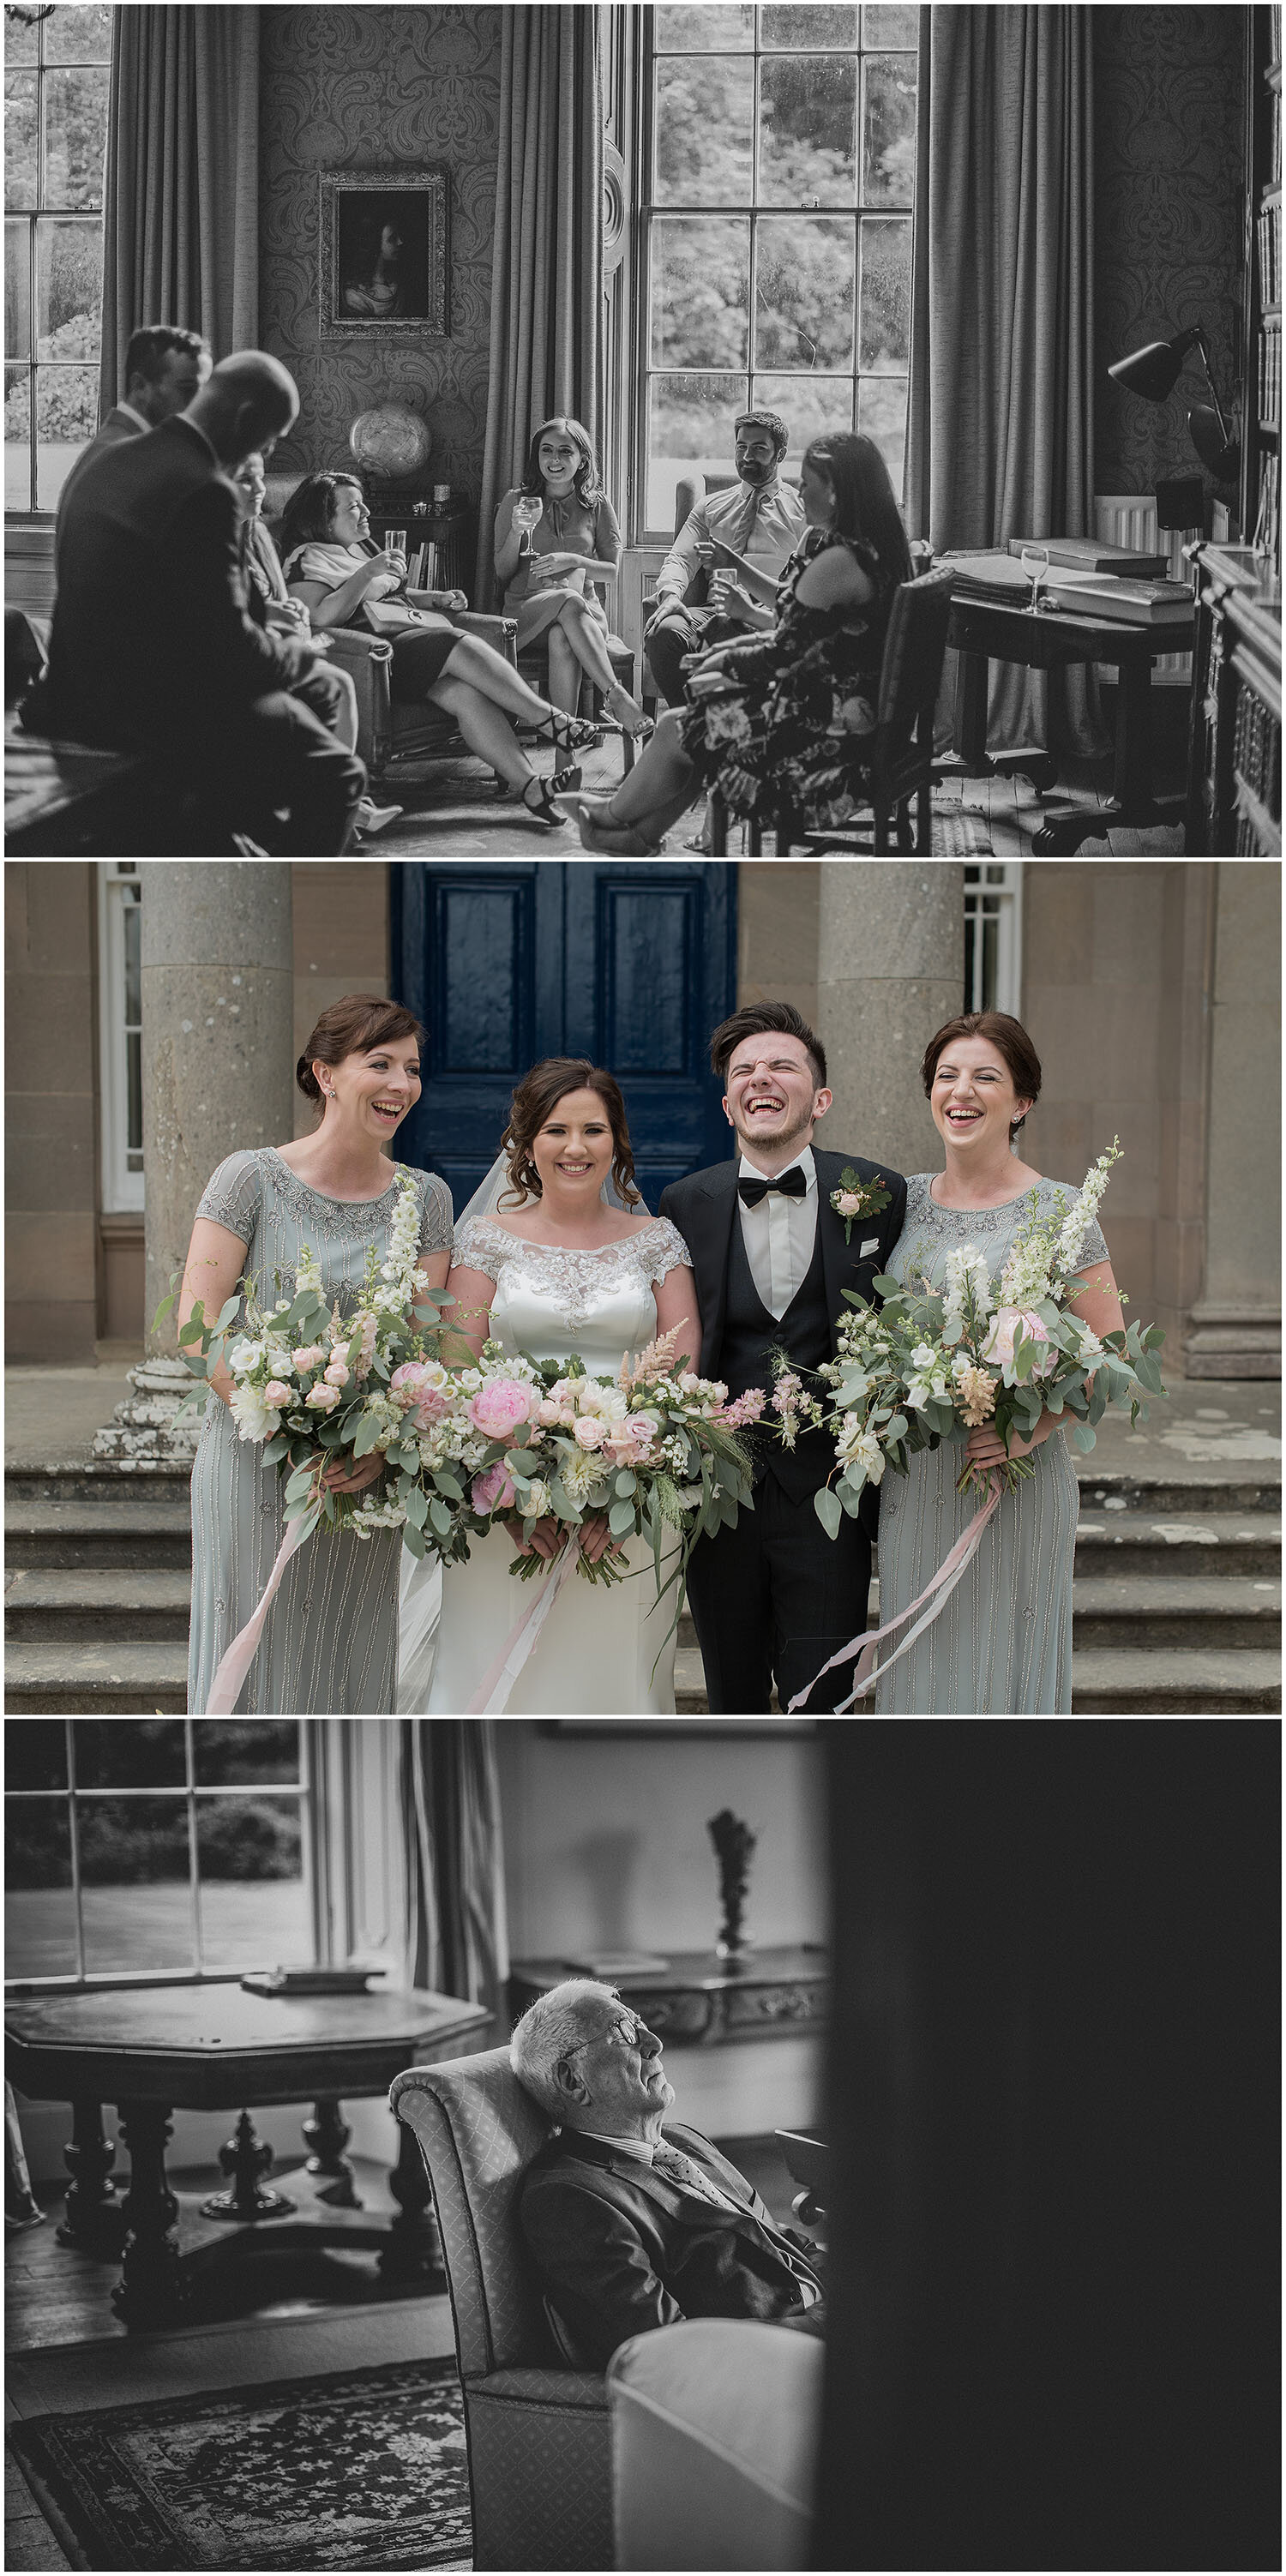 Drenagh House Wedding Pictures, Mark Barton Photography_0054.jpg